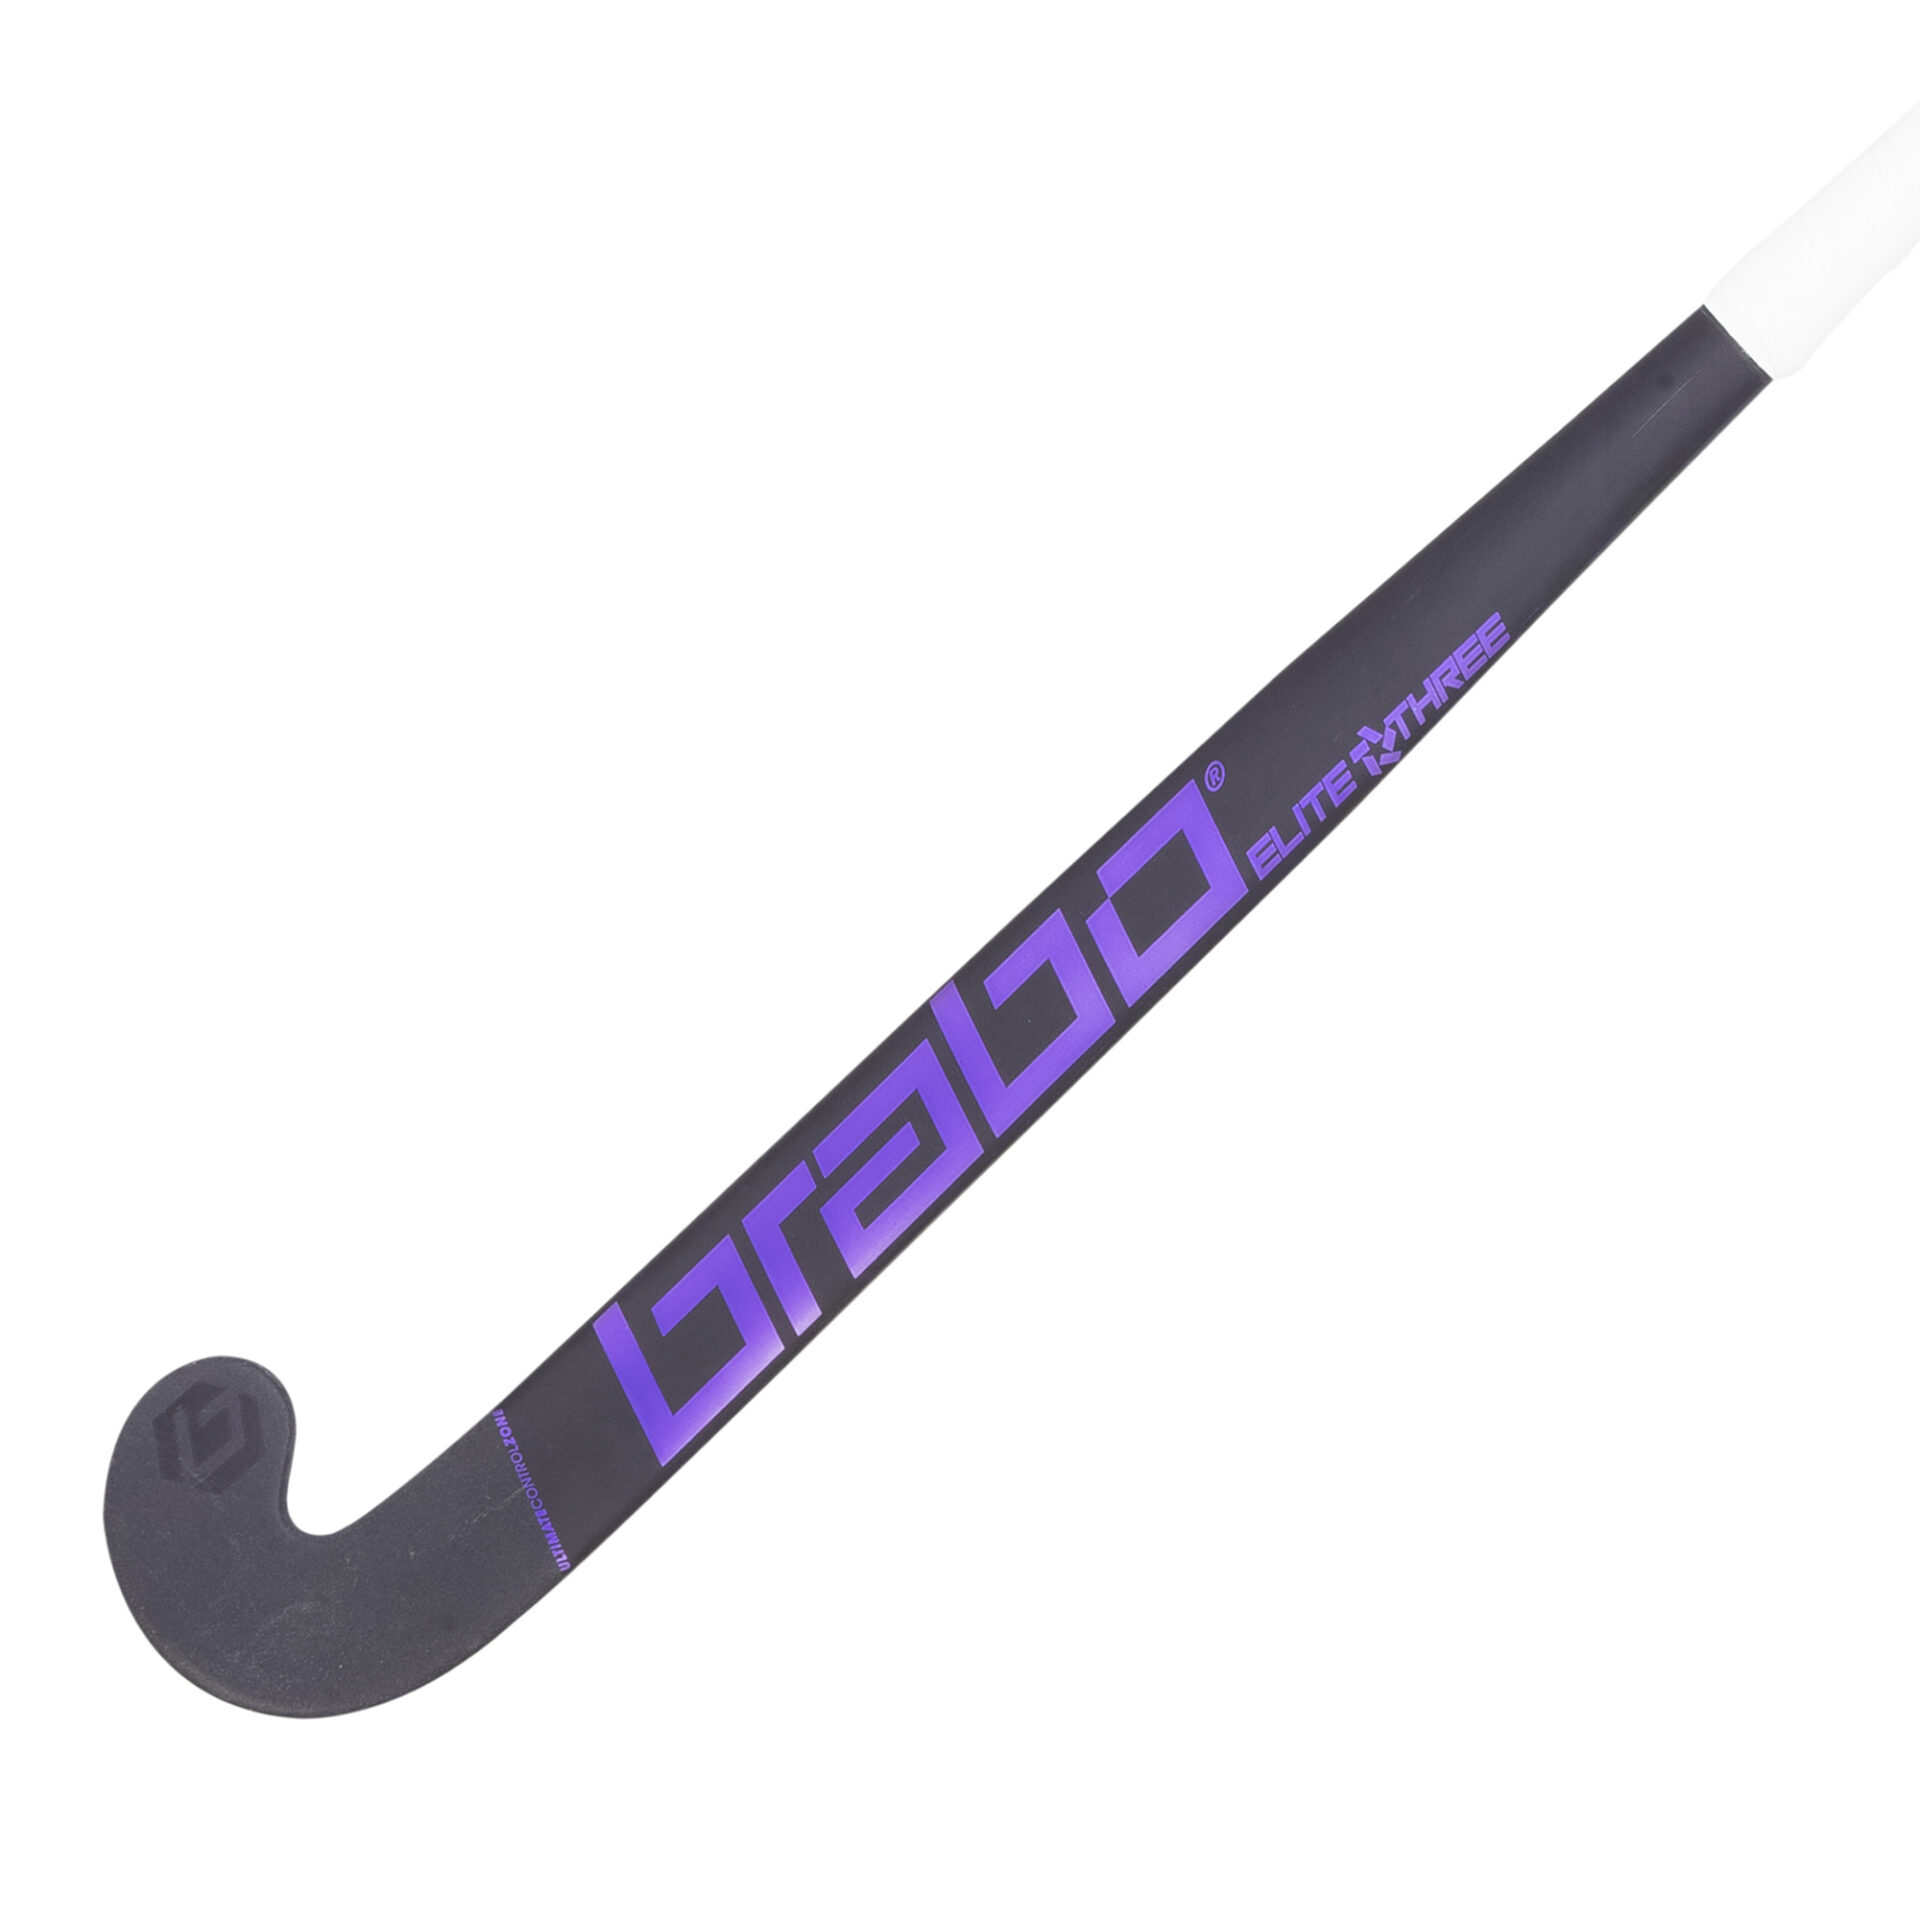 Elite 3 WTB Forged Carbon Extreme Low Bow - Brabo hockey